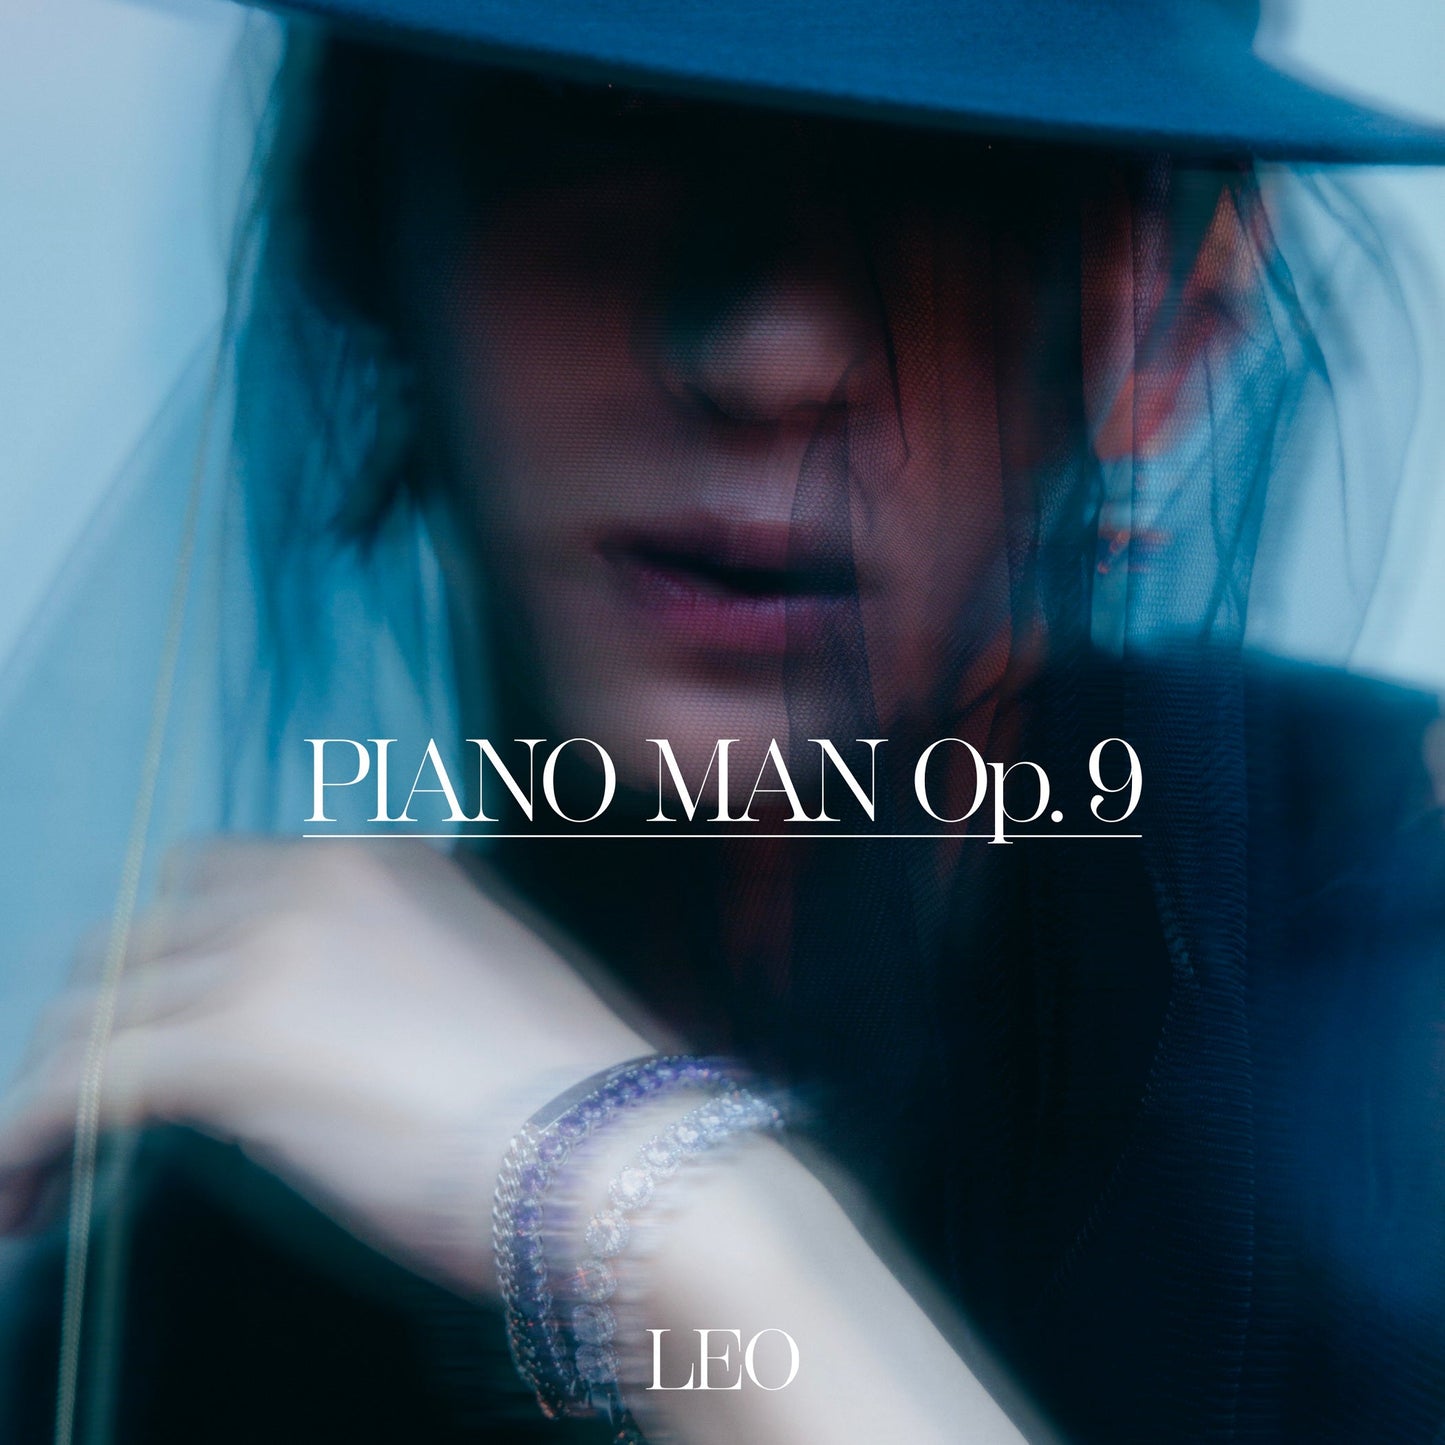 LEO 3RD MINI ALBUM 'PIANO MAN OP. 9' COVER